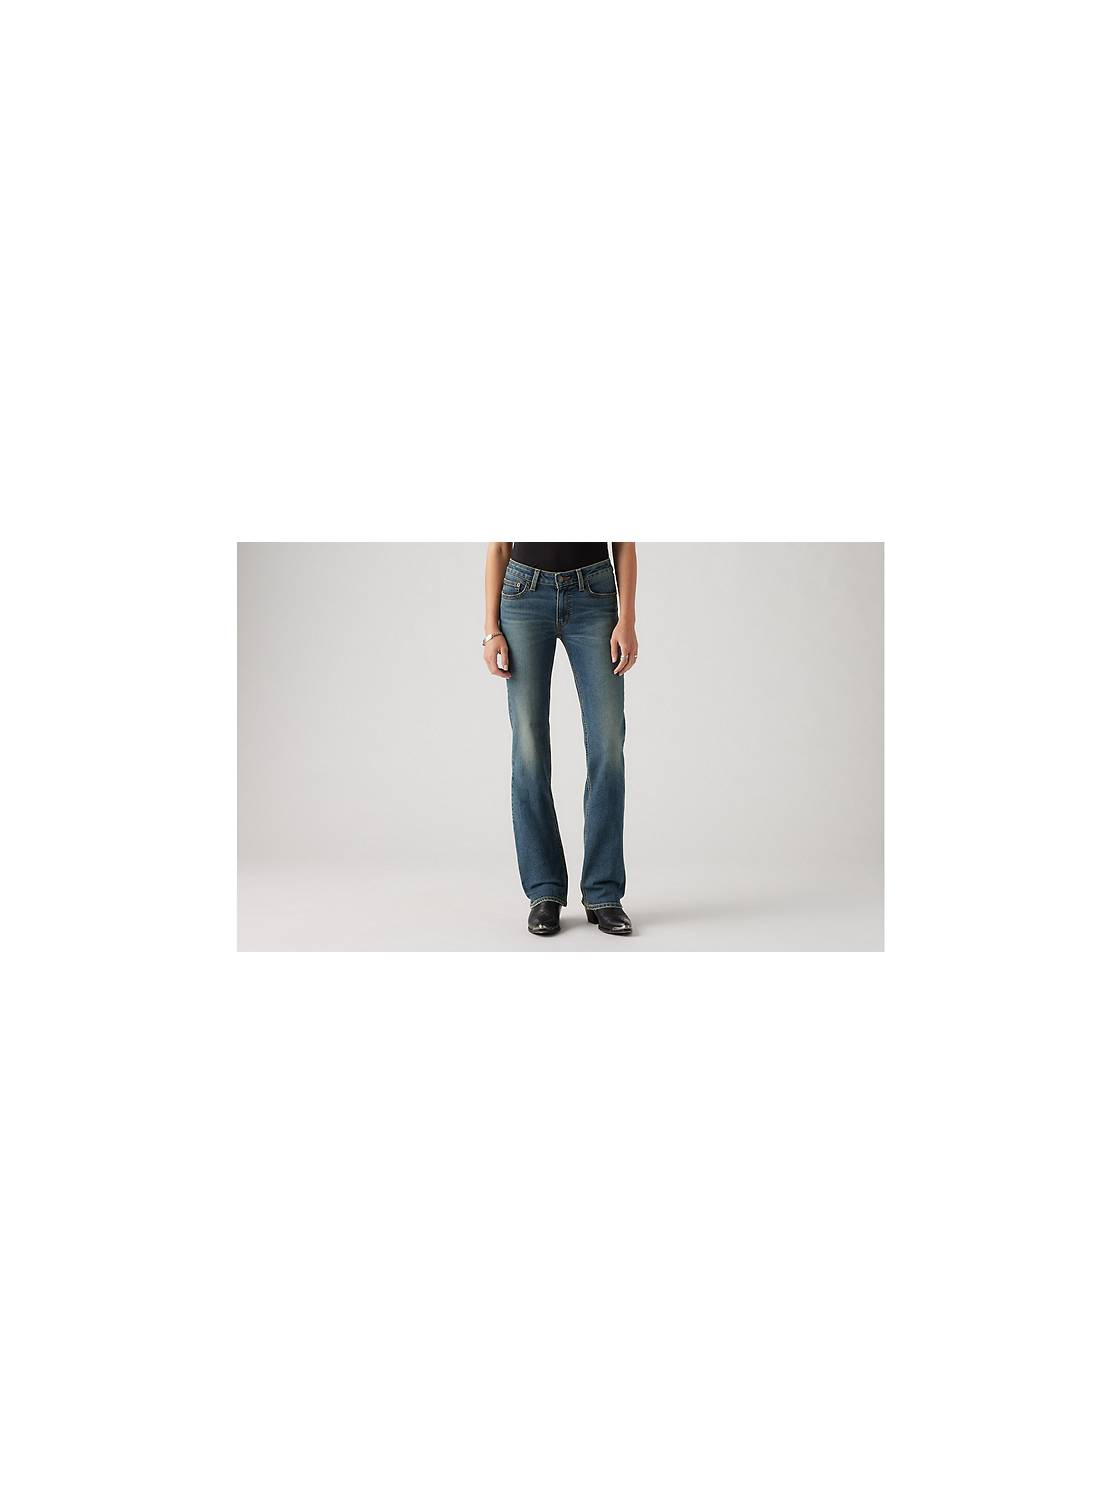 Low waist bootcut jeans